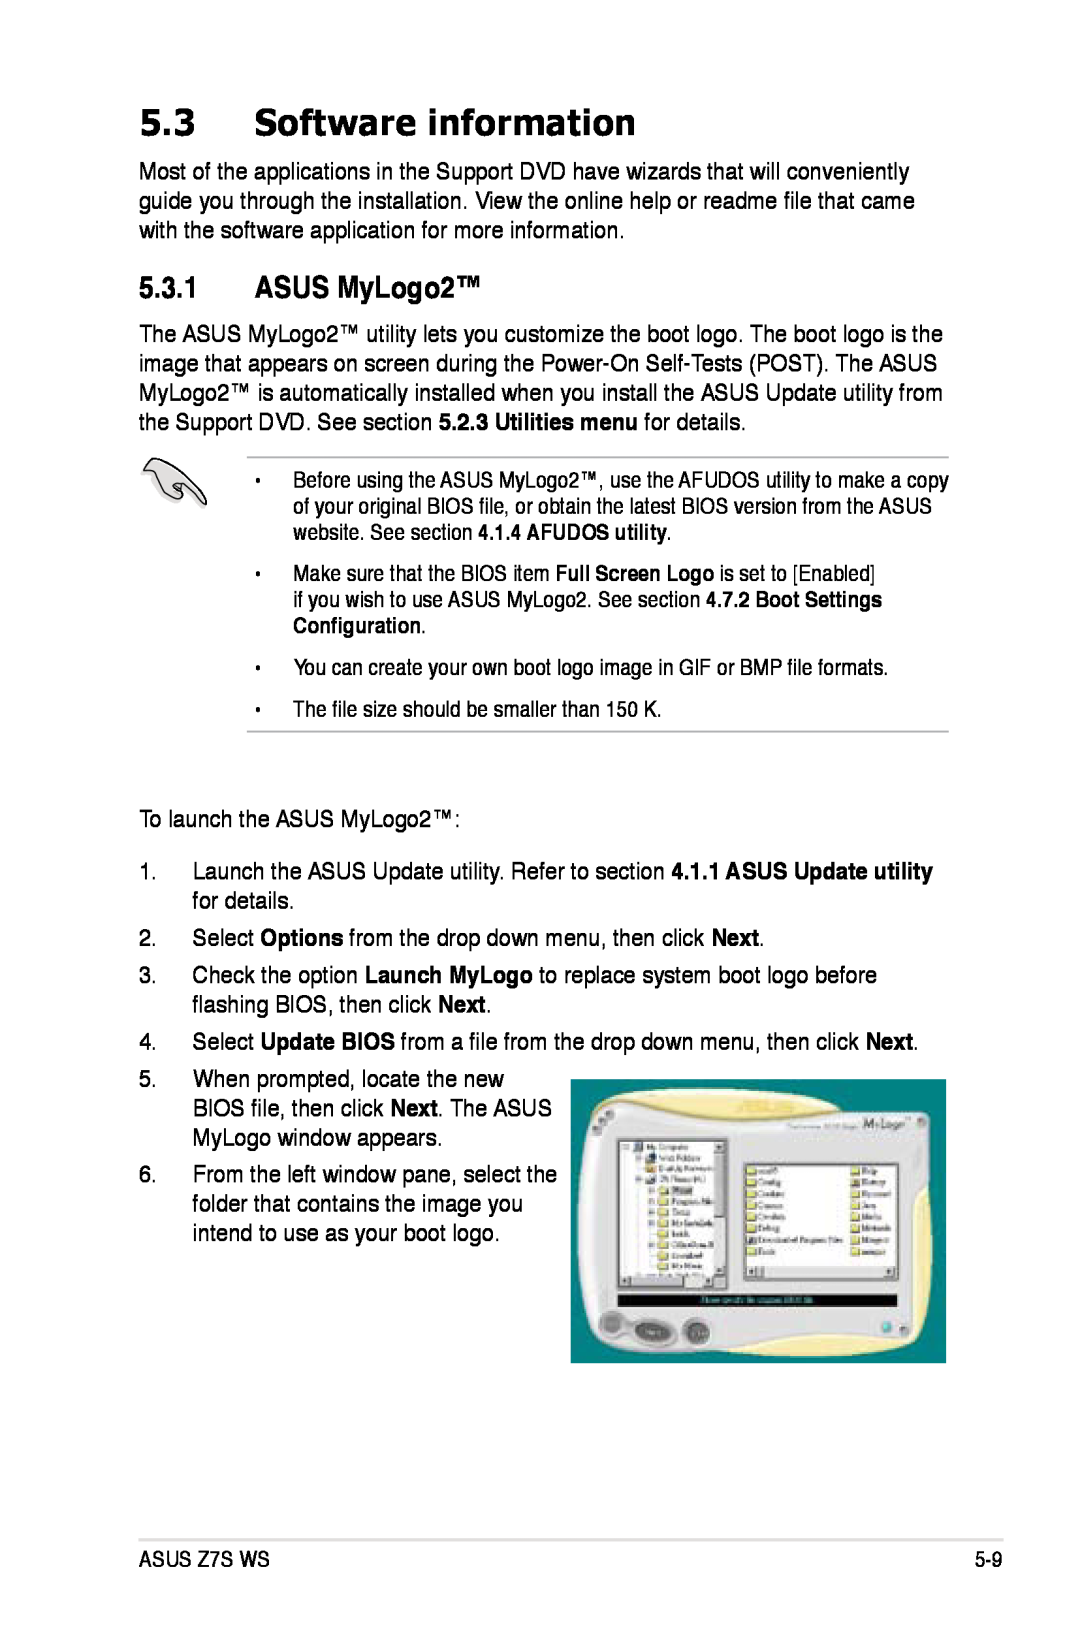 Asus manual Software information, ASUS MyLogo2, Configuration, ASUS Z7S WS 